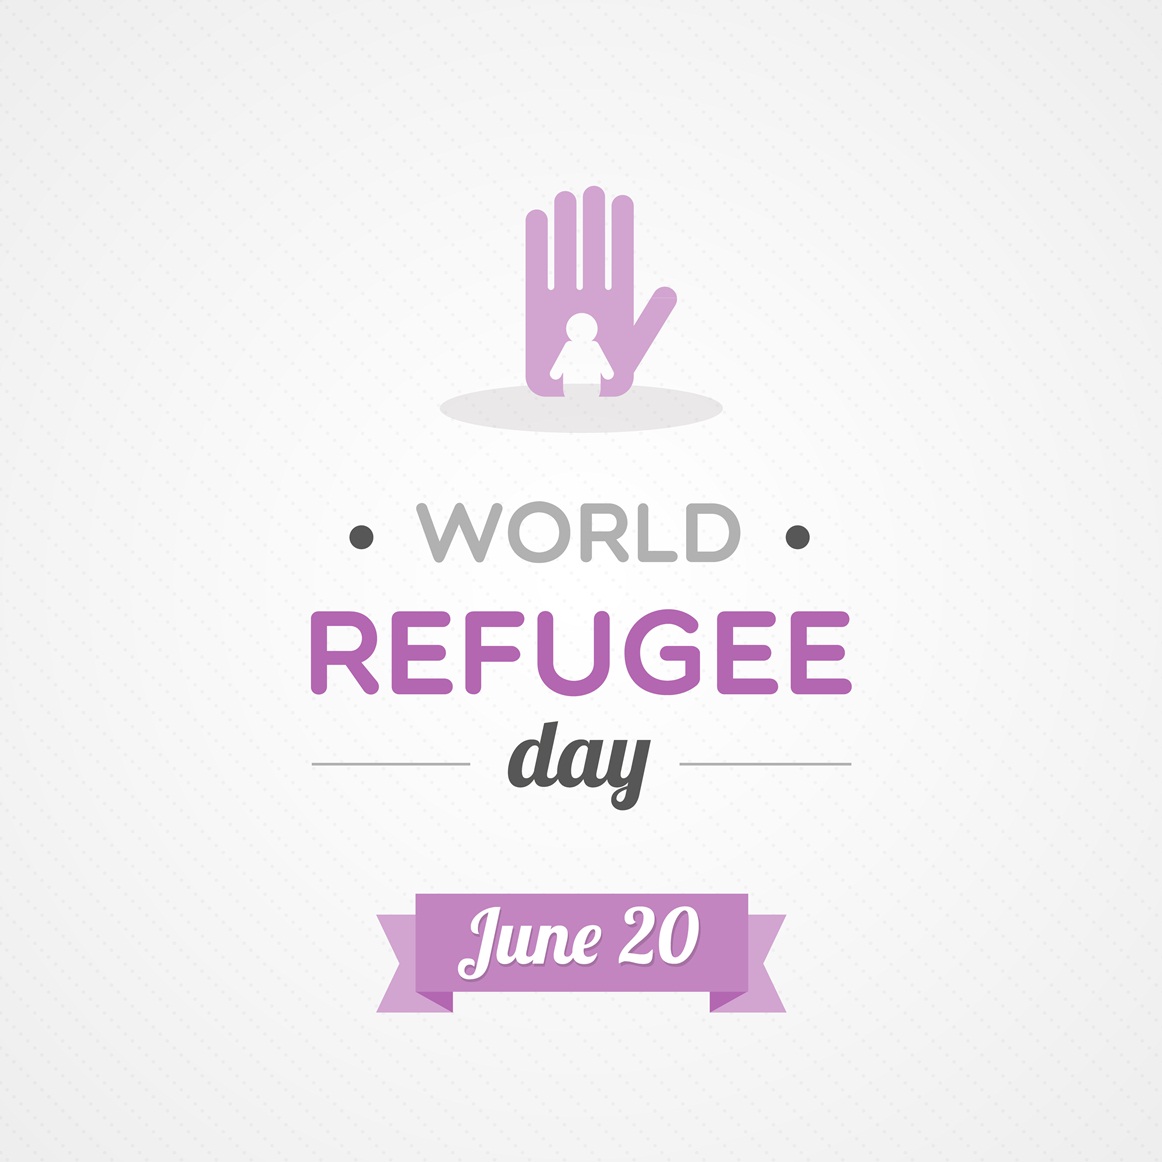 June 20, World Refugee Day